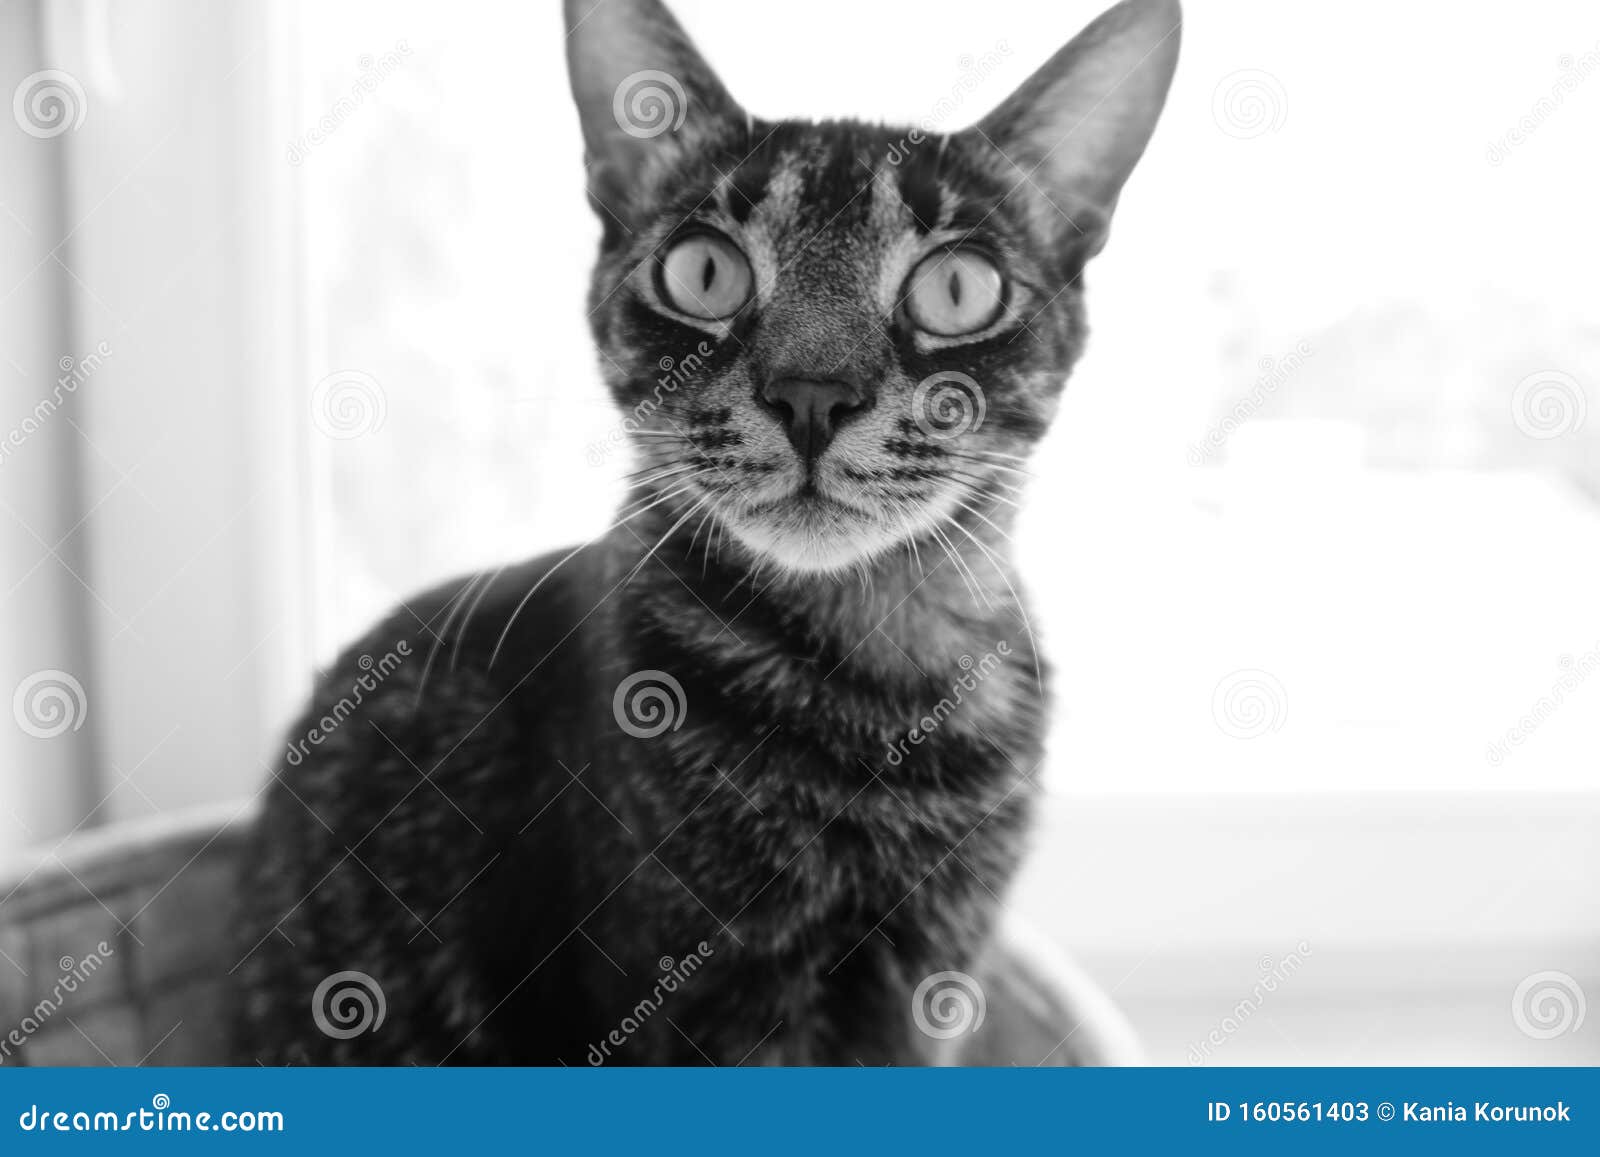 photo of striped cat